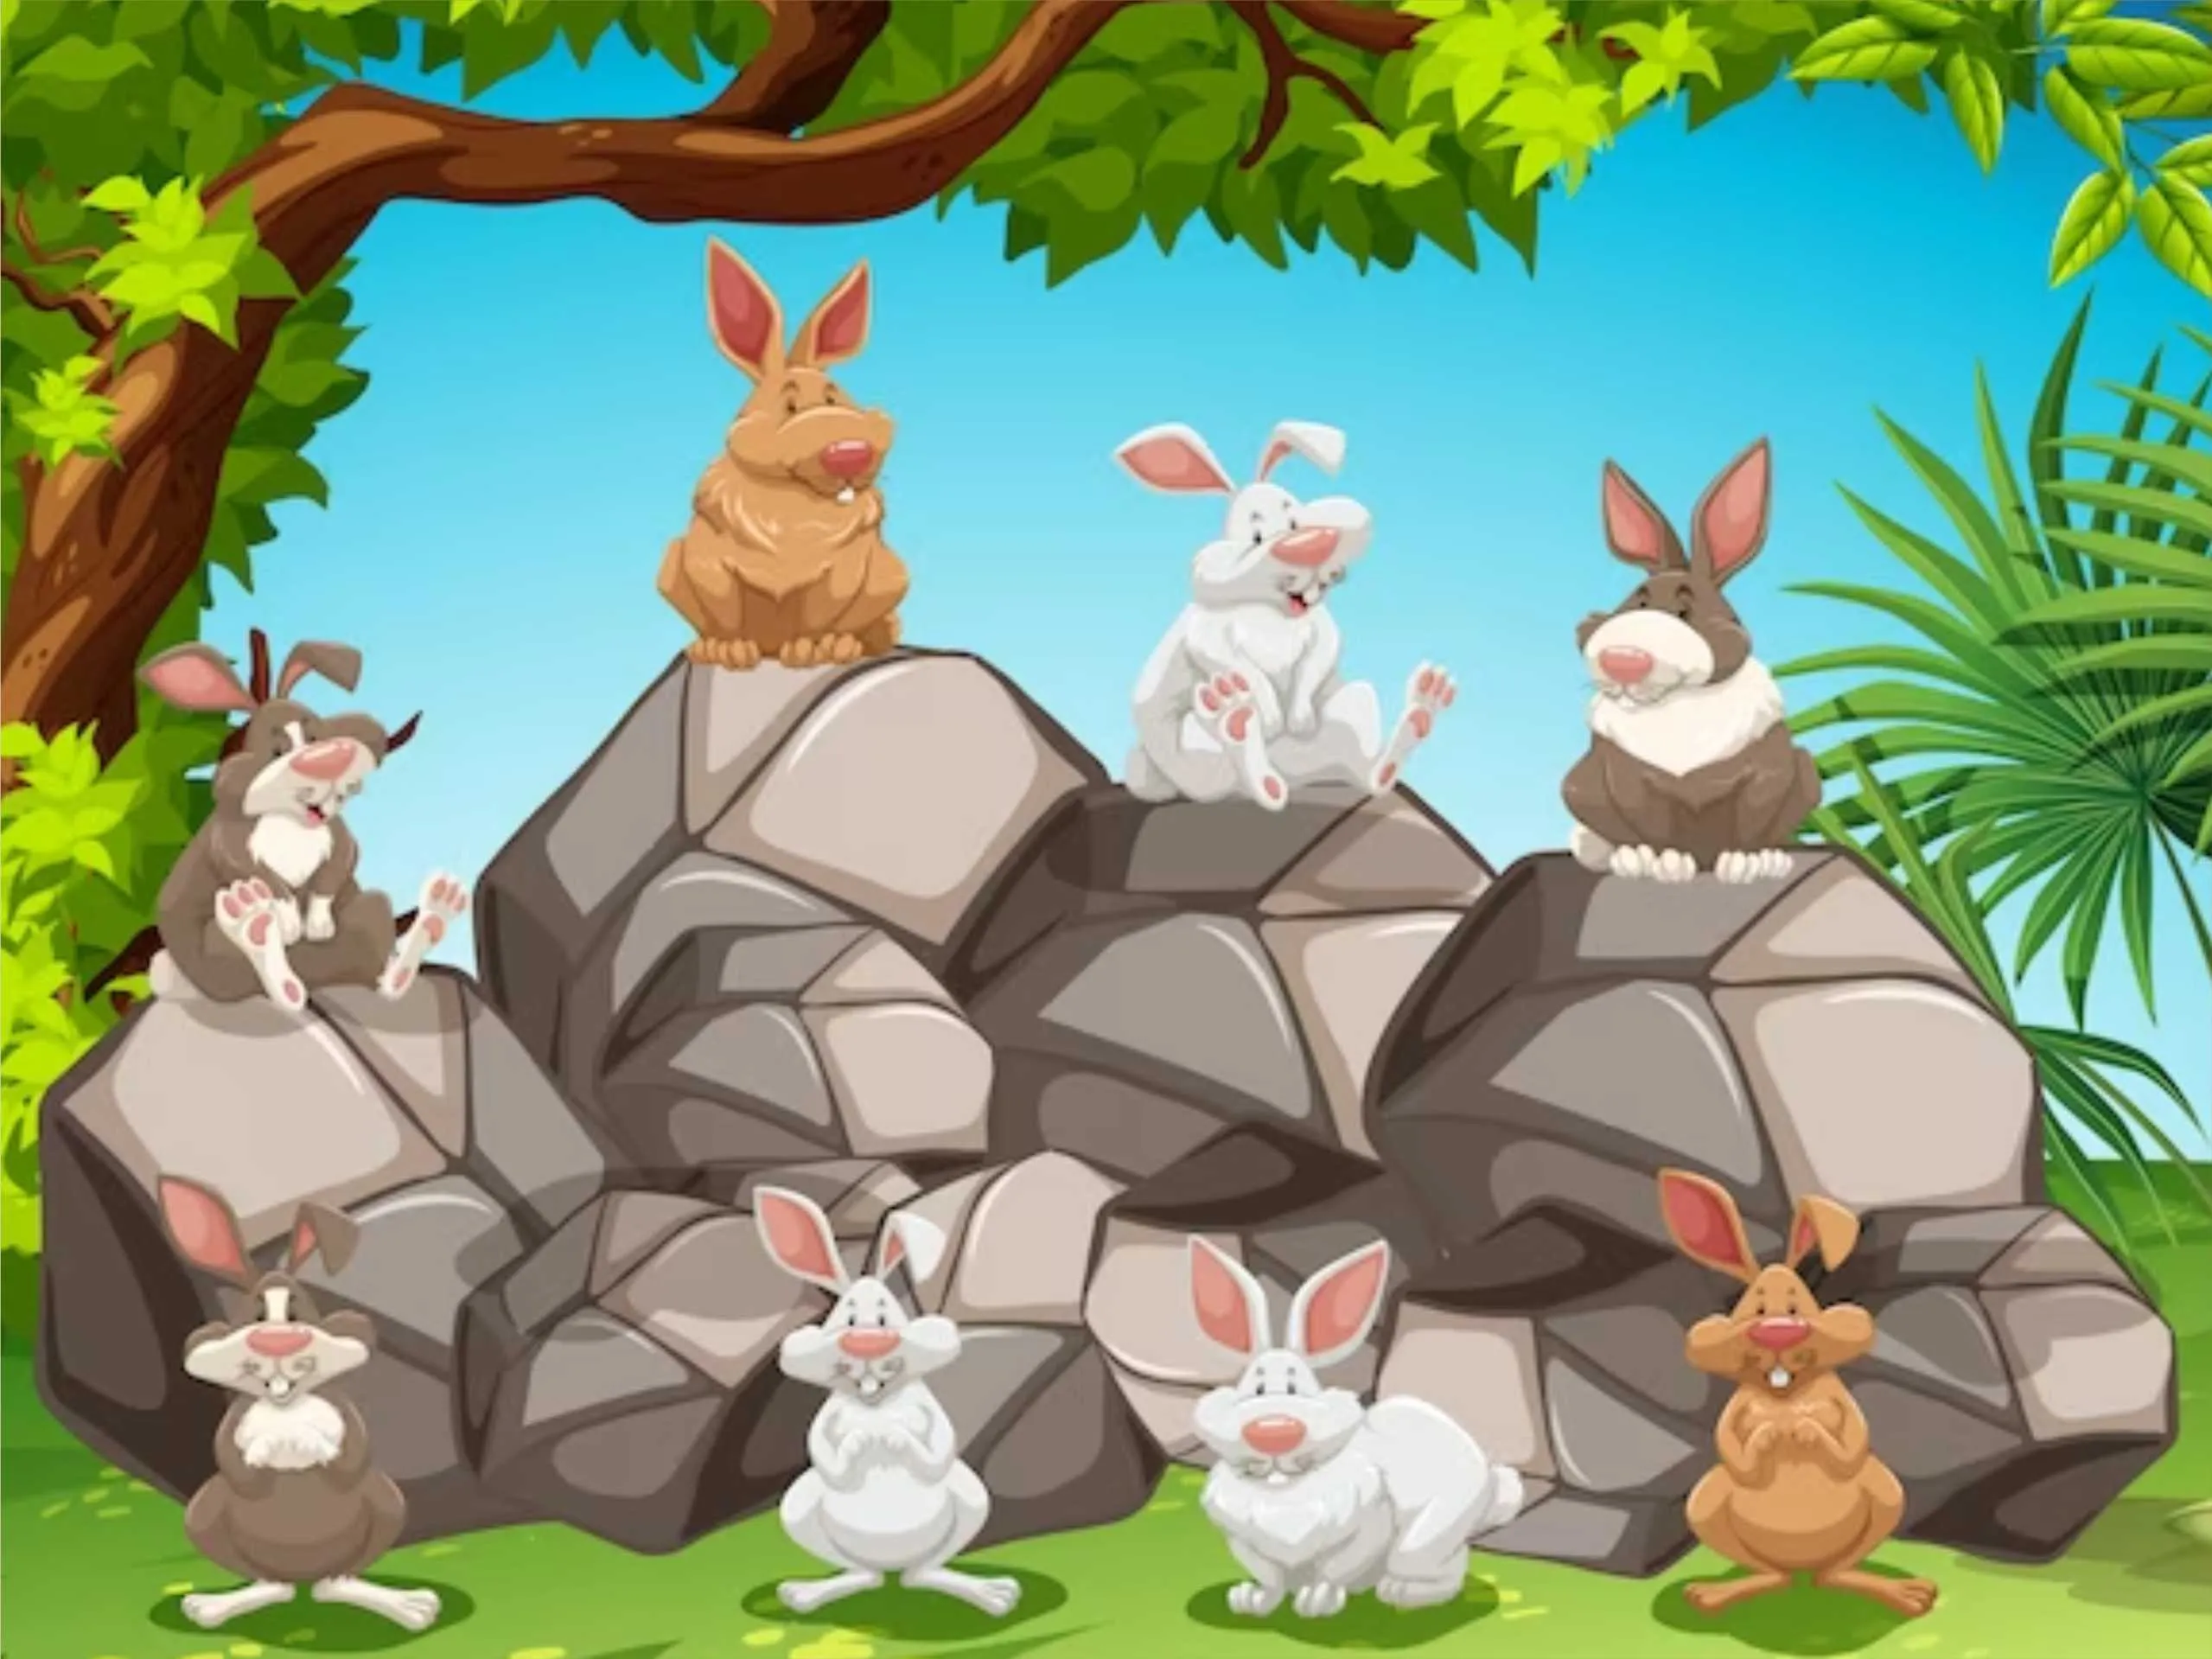 Rabbits in jungle cartoon image